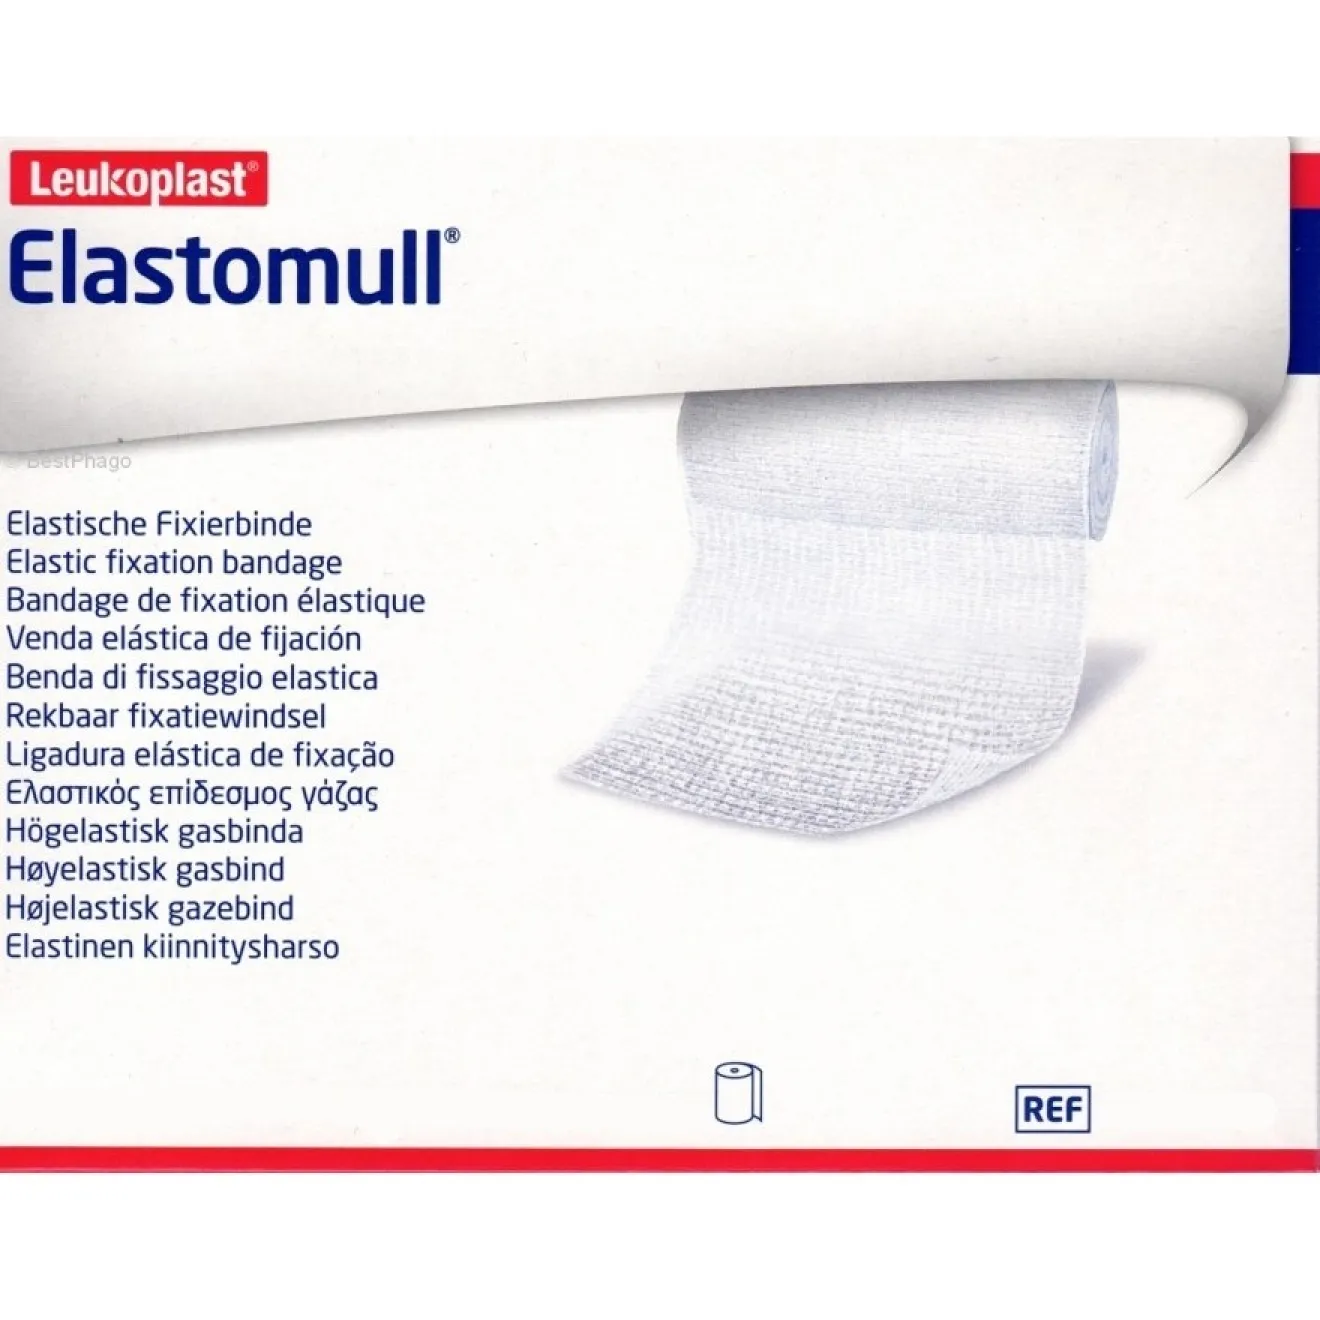 Elastomull 4mx6cm elastische Fixierbinde 2095 1 ST